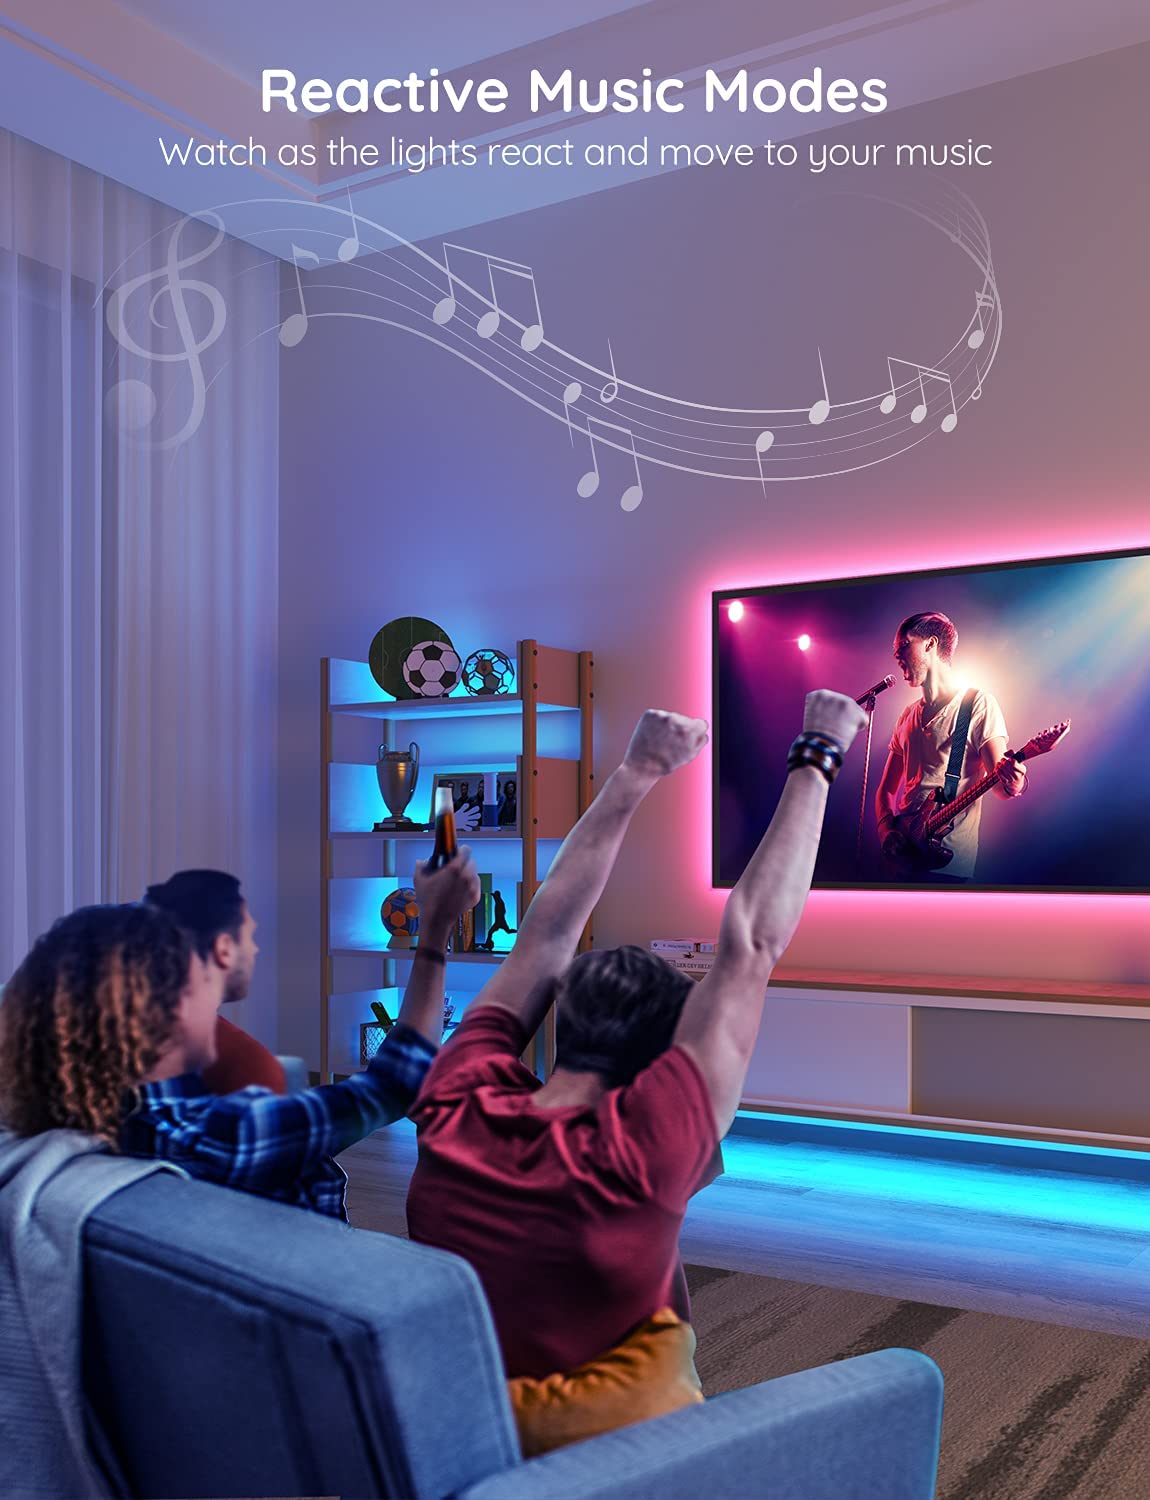 Govee Smart WiFi LED Lights 10m, RGB Strip Lights for Bedroom, TV